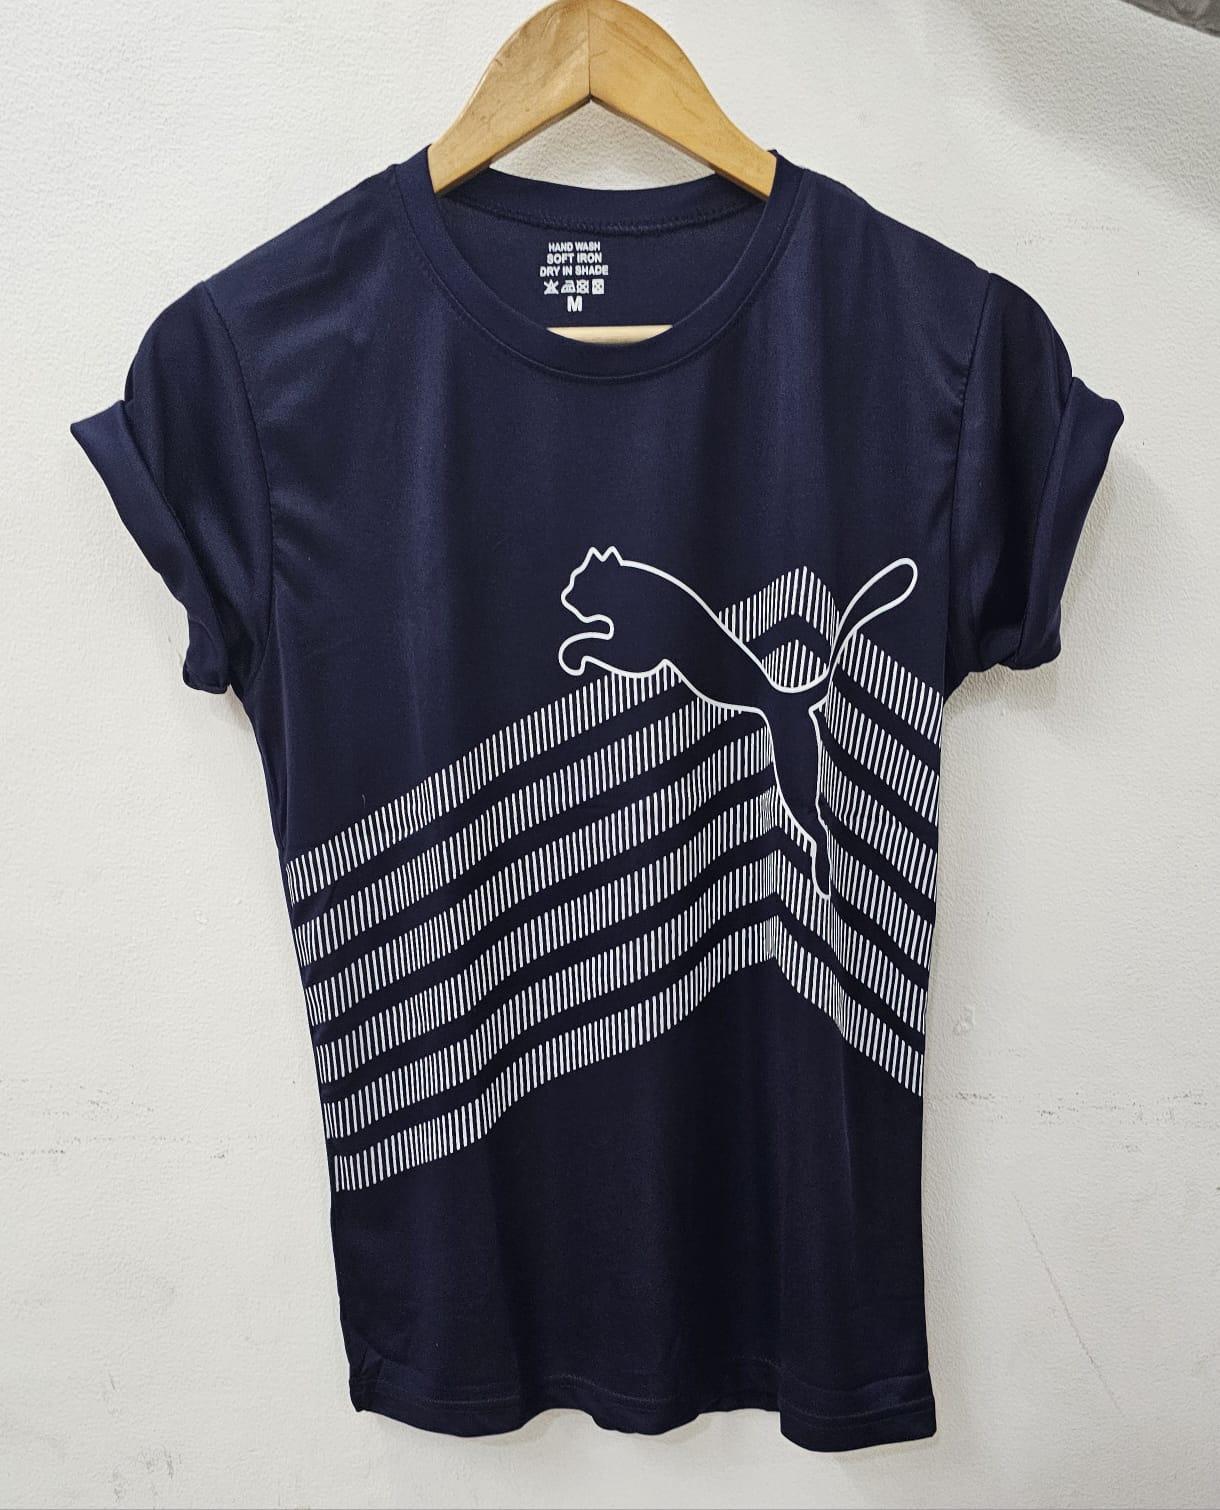 Men's Half Sleeve Printed Polyester T-shirt